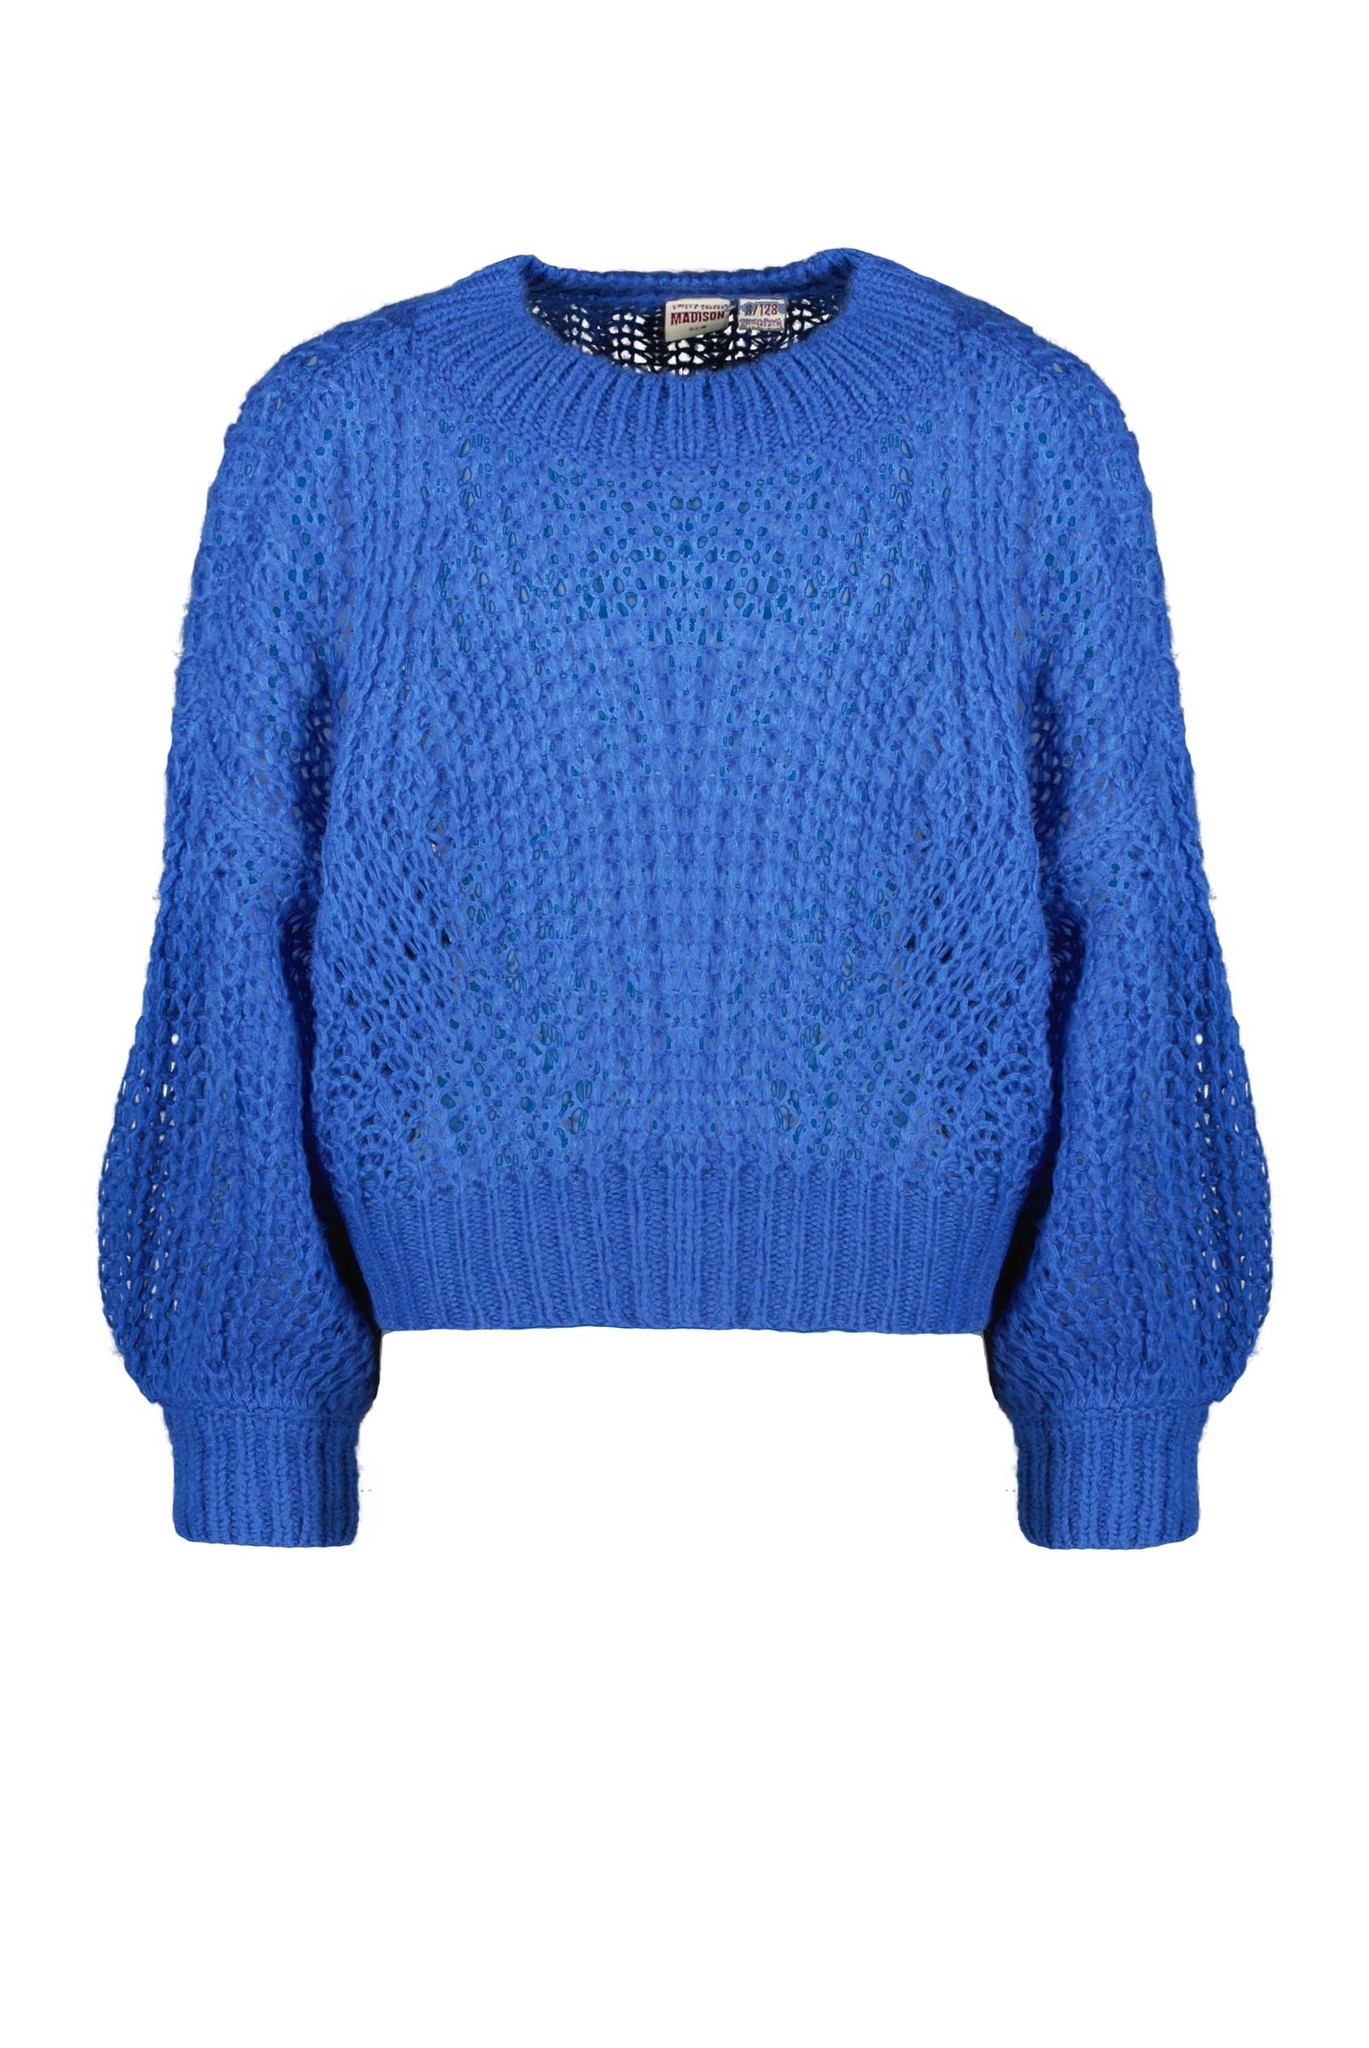 Street called Madison Meisjes sweater Funday - Kobalt